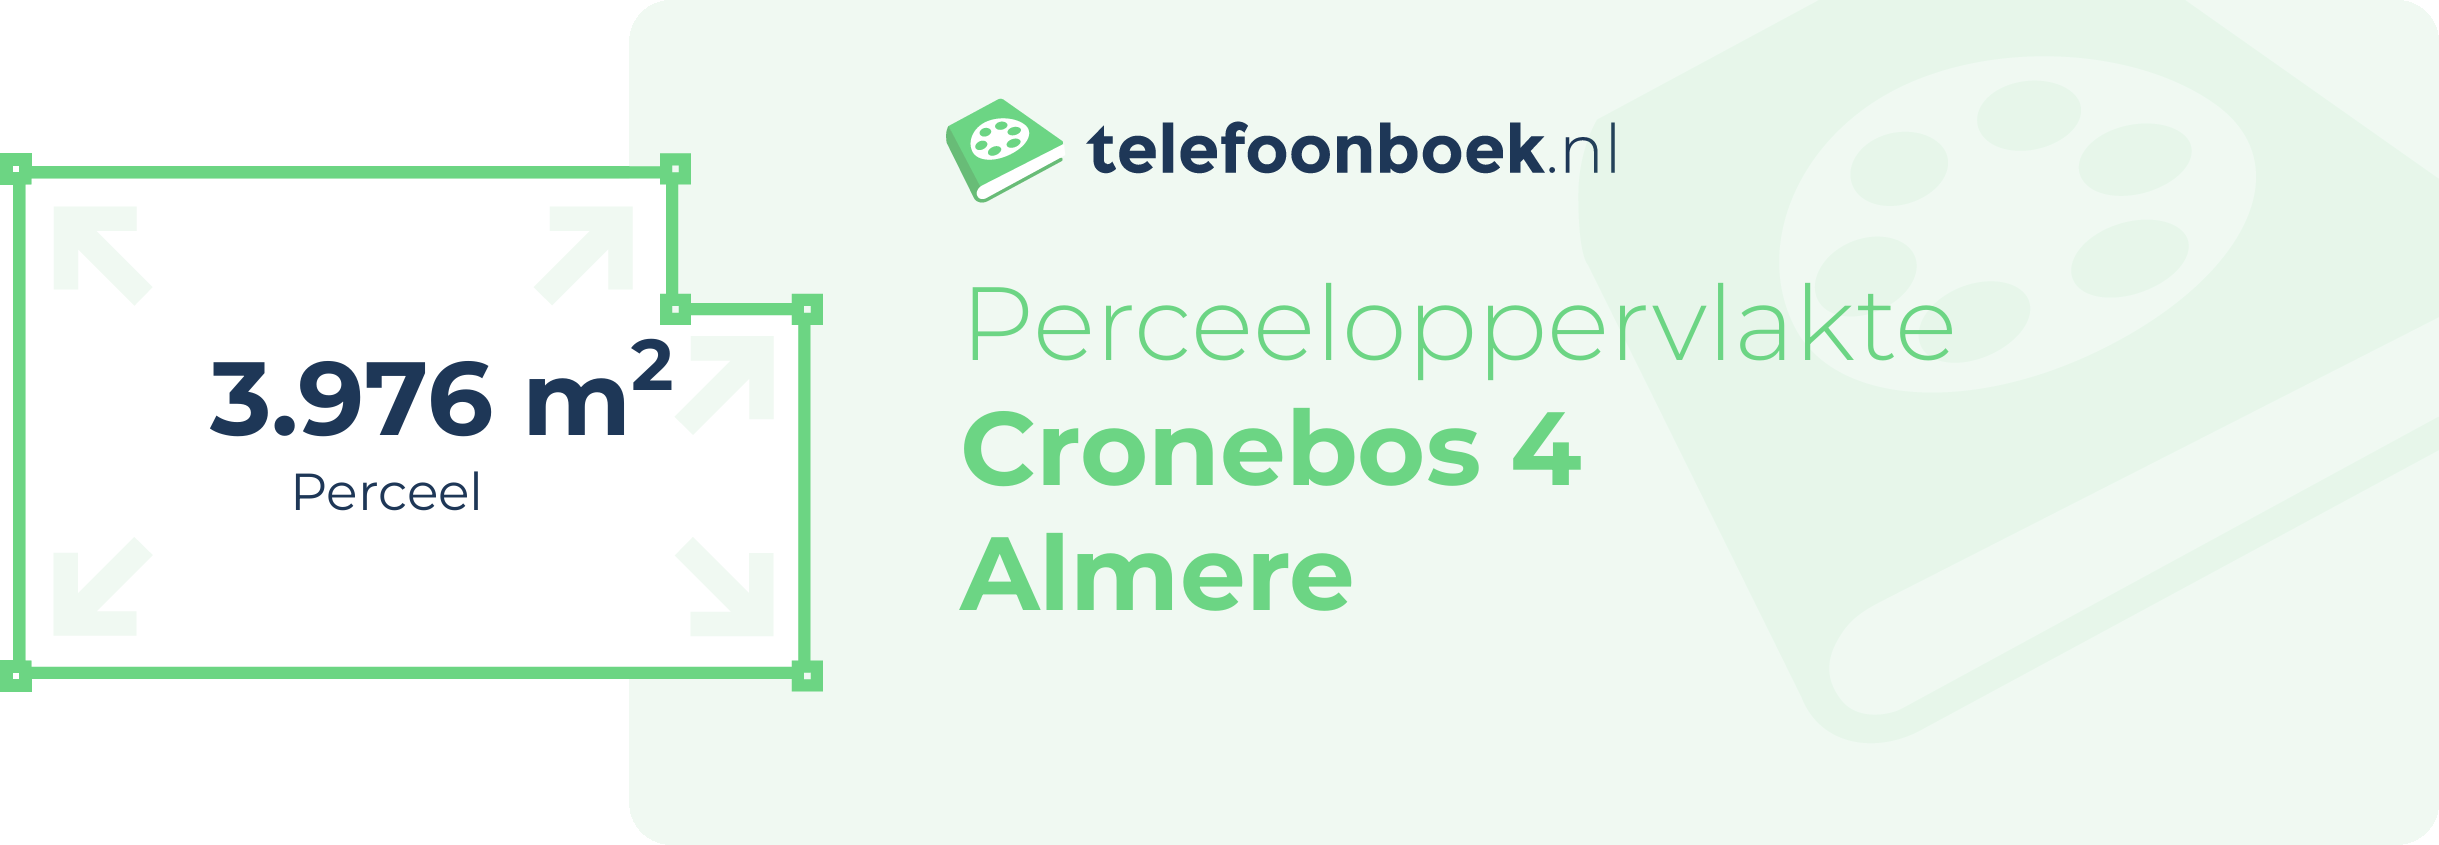 Perceeloppervlakte Cronebos 4 Almere